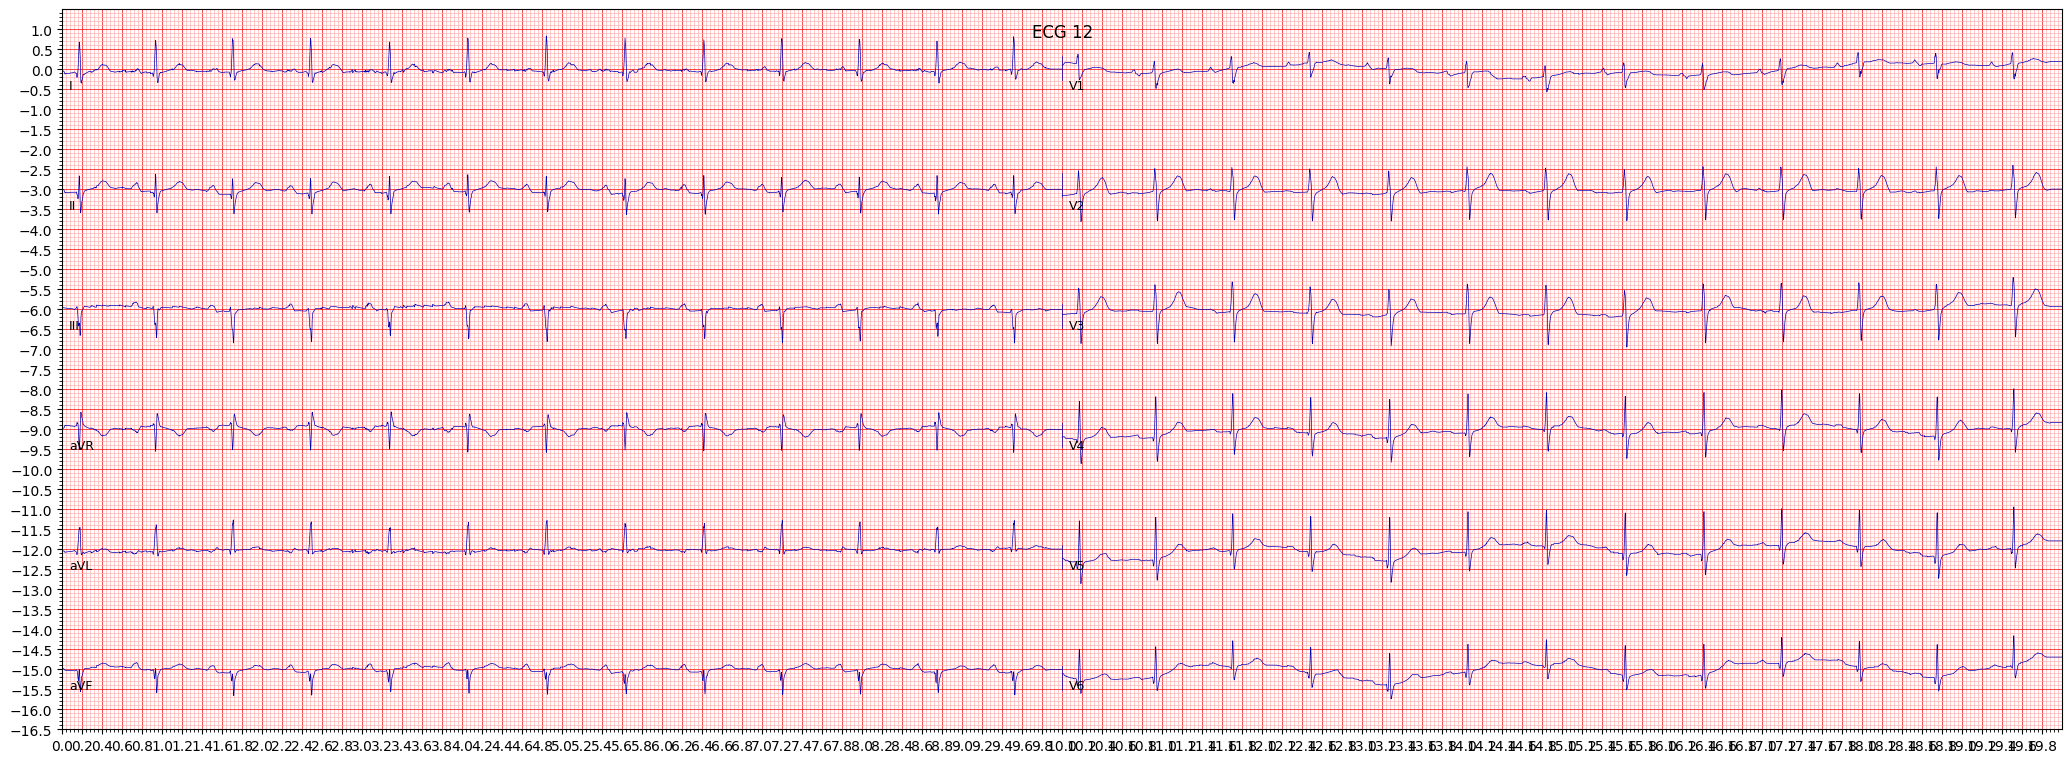 inferoposterolateral myocardial infarction (IPLMI) example 1081